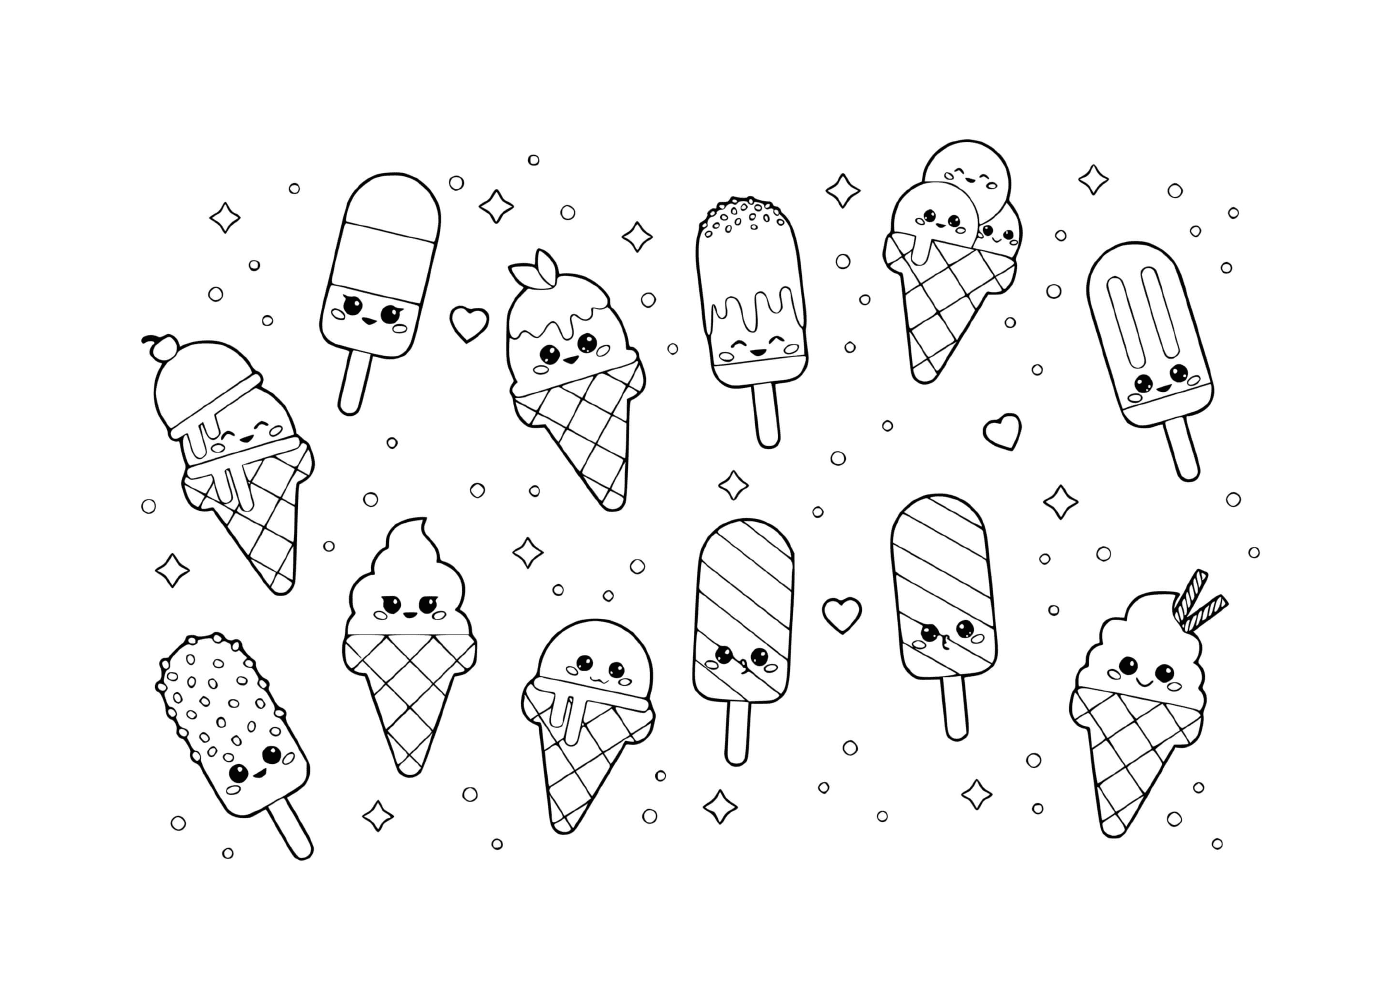  Assorted adorable ice creams 